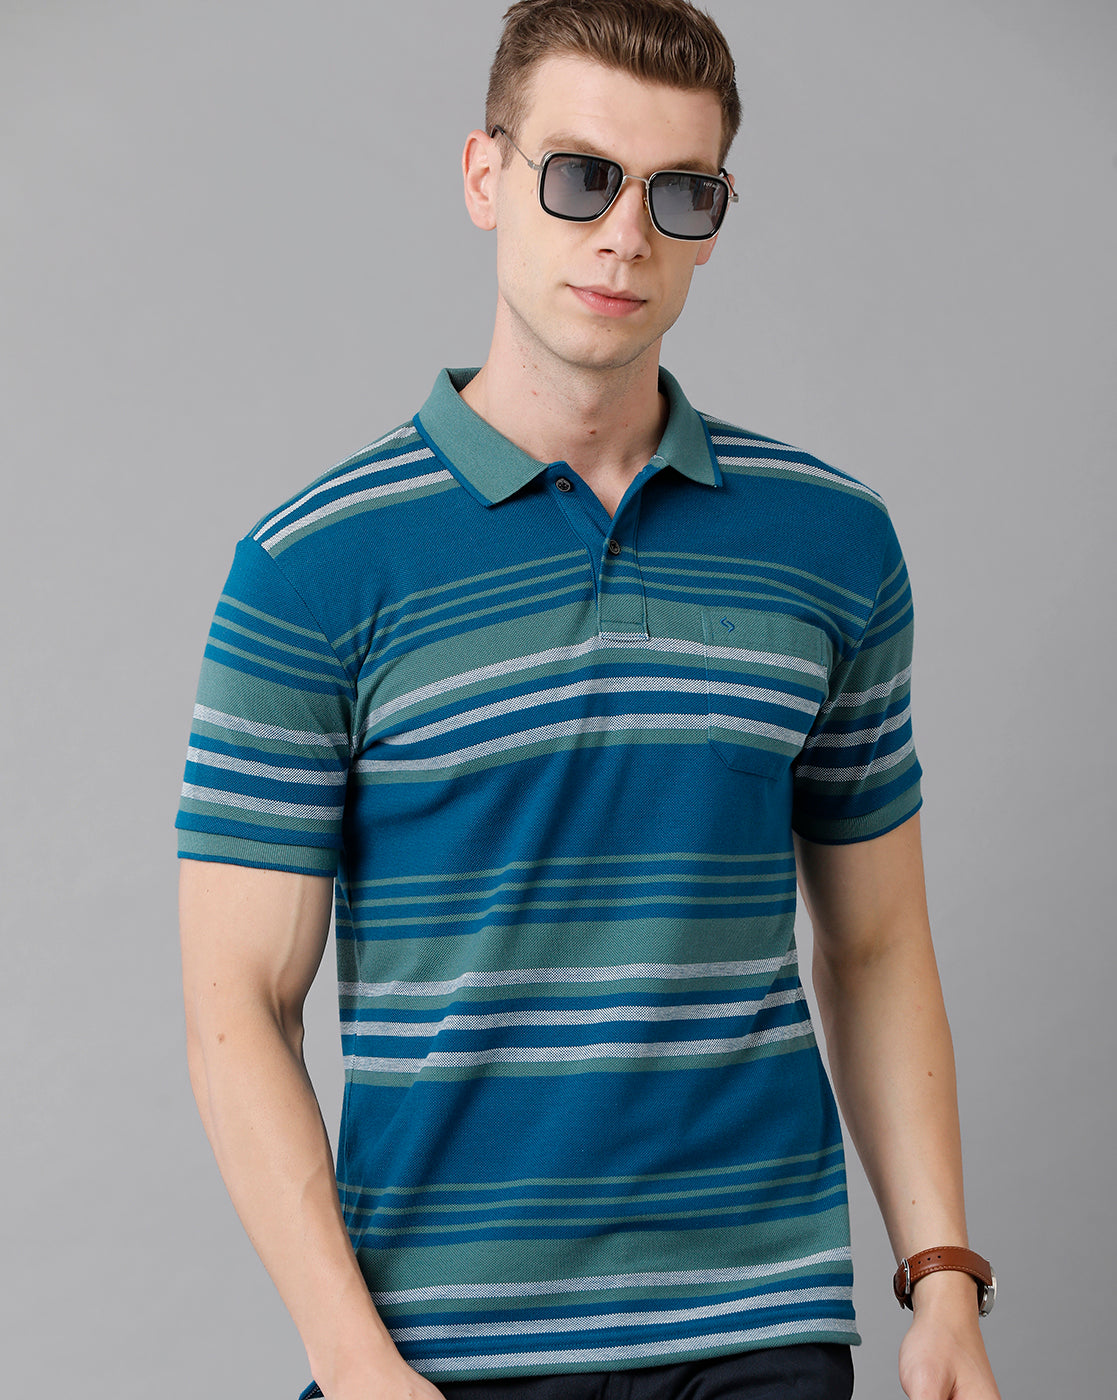 Classic Polo Men's Cotton Blend Striped Slim Fit Multicolor T-Shirt | Adore - 174 B